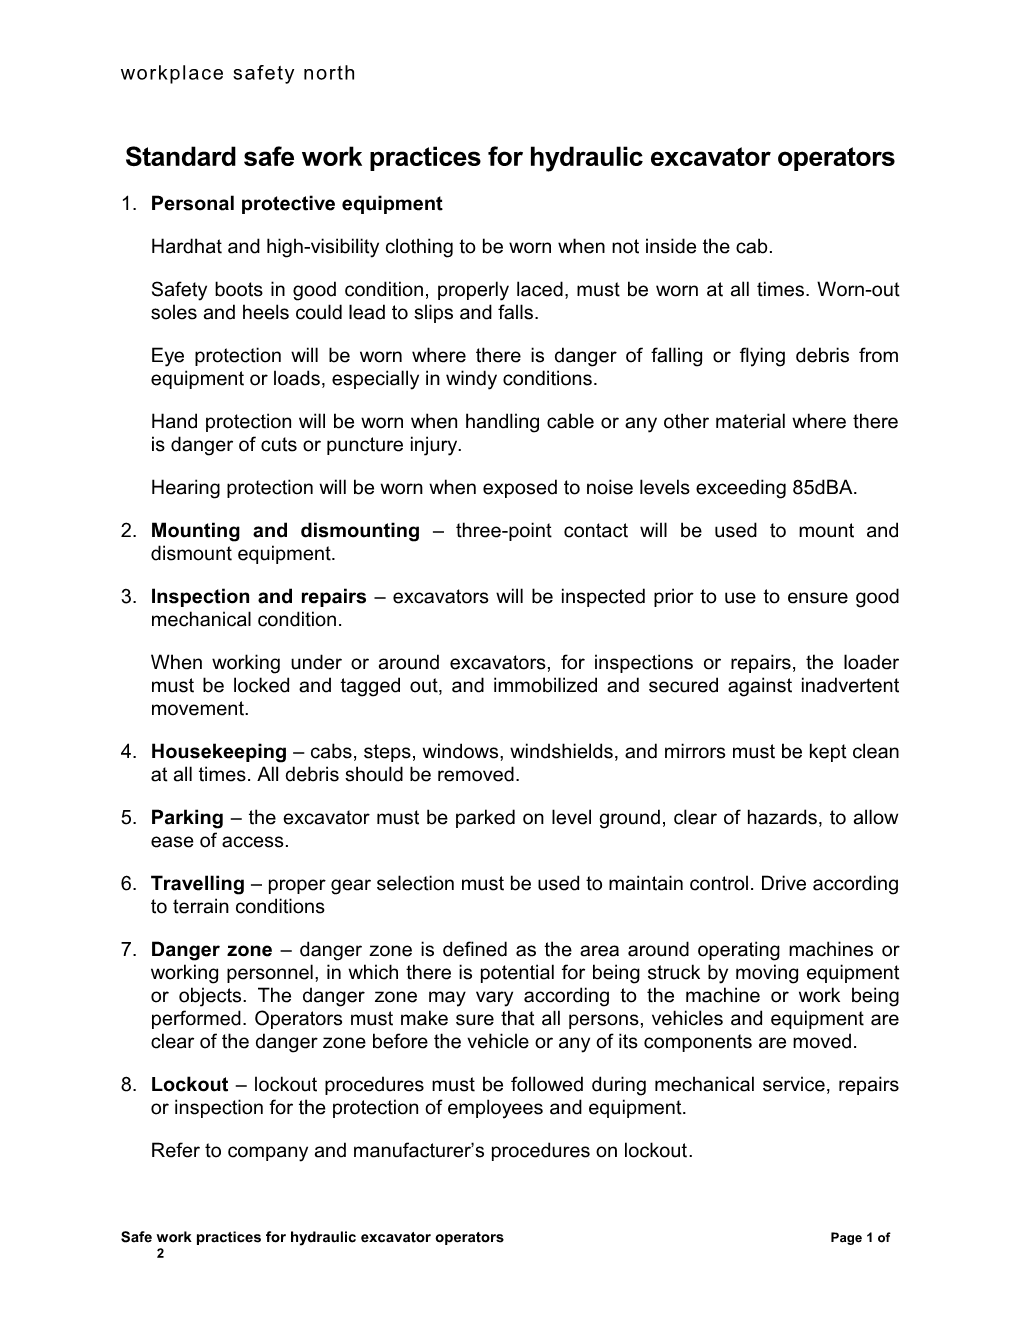 Standard Safe Work Practices for Hydraulic Excavator Operators